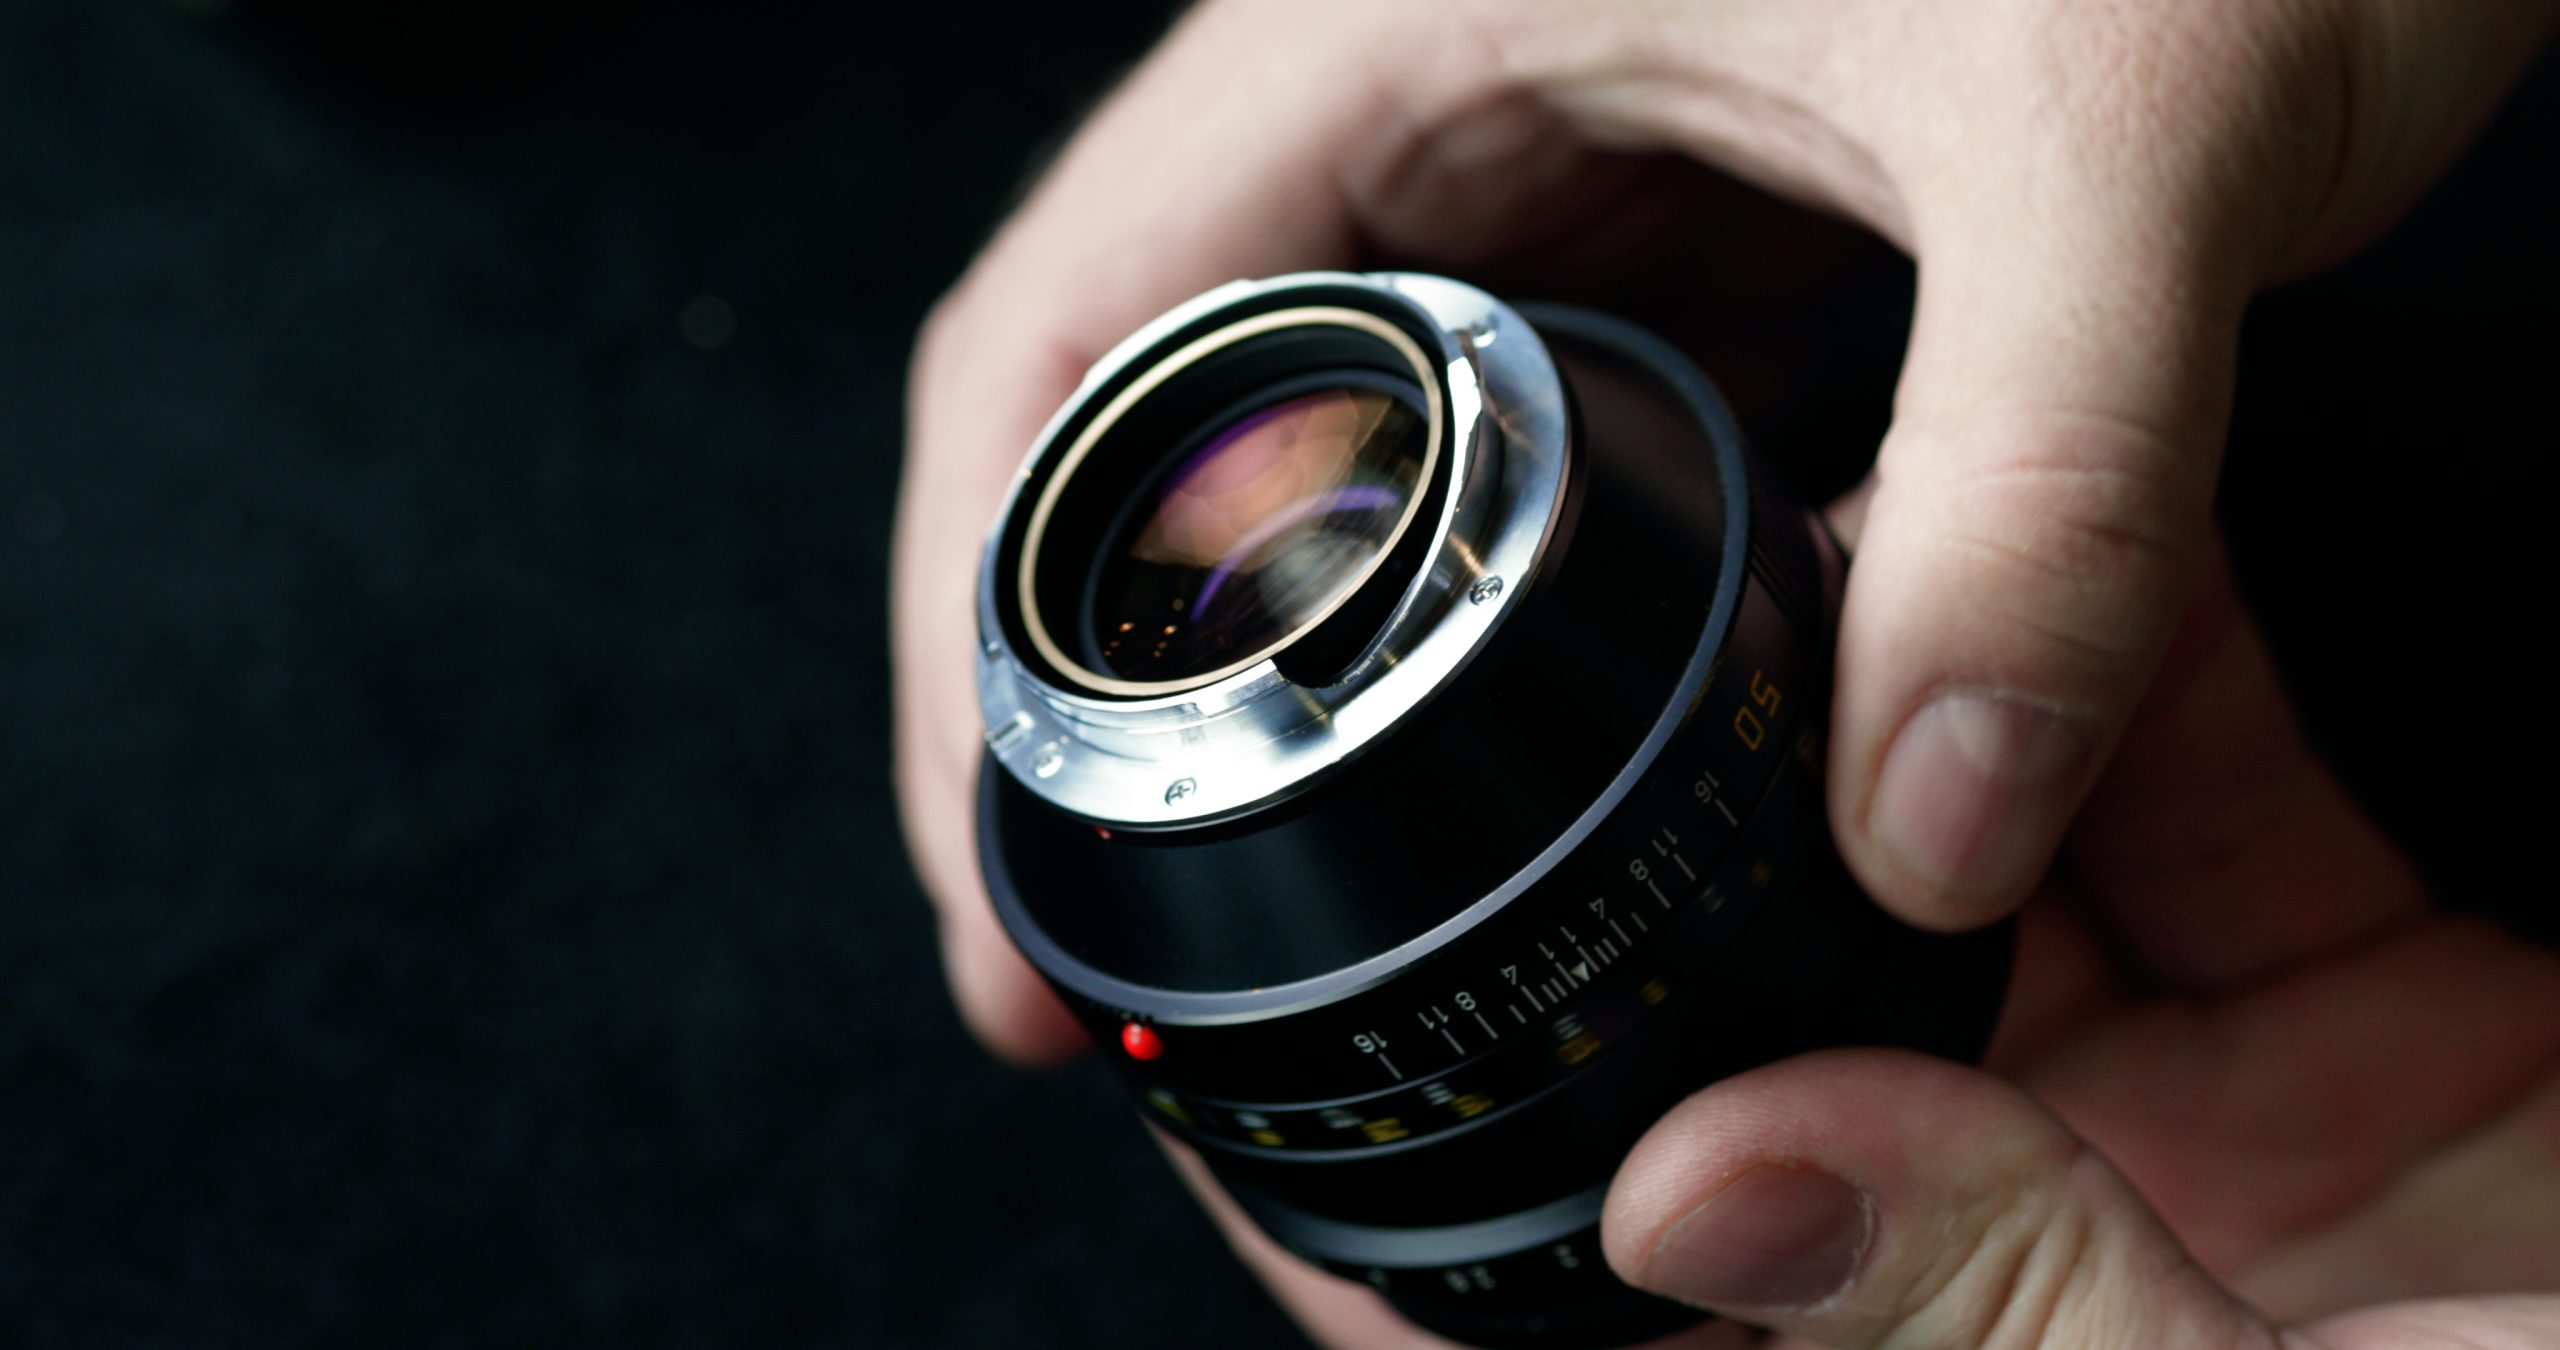 Leica Noctilux-M 50mm f/1.0 ASPH Lens Photography, Master Photographer Oz Yilmaz explains how to capture better photographs with Leica Noctilux-M 50mm lens.